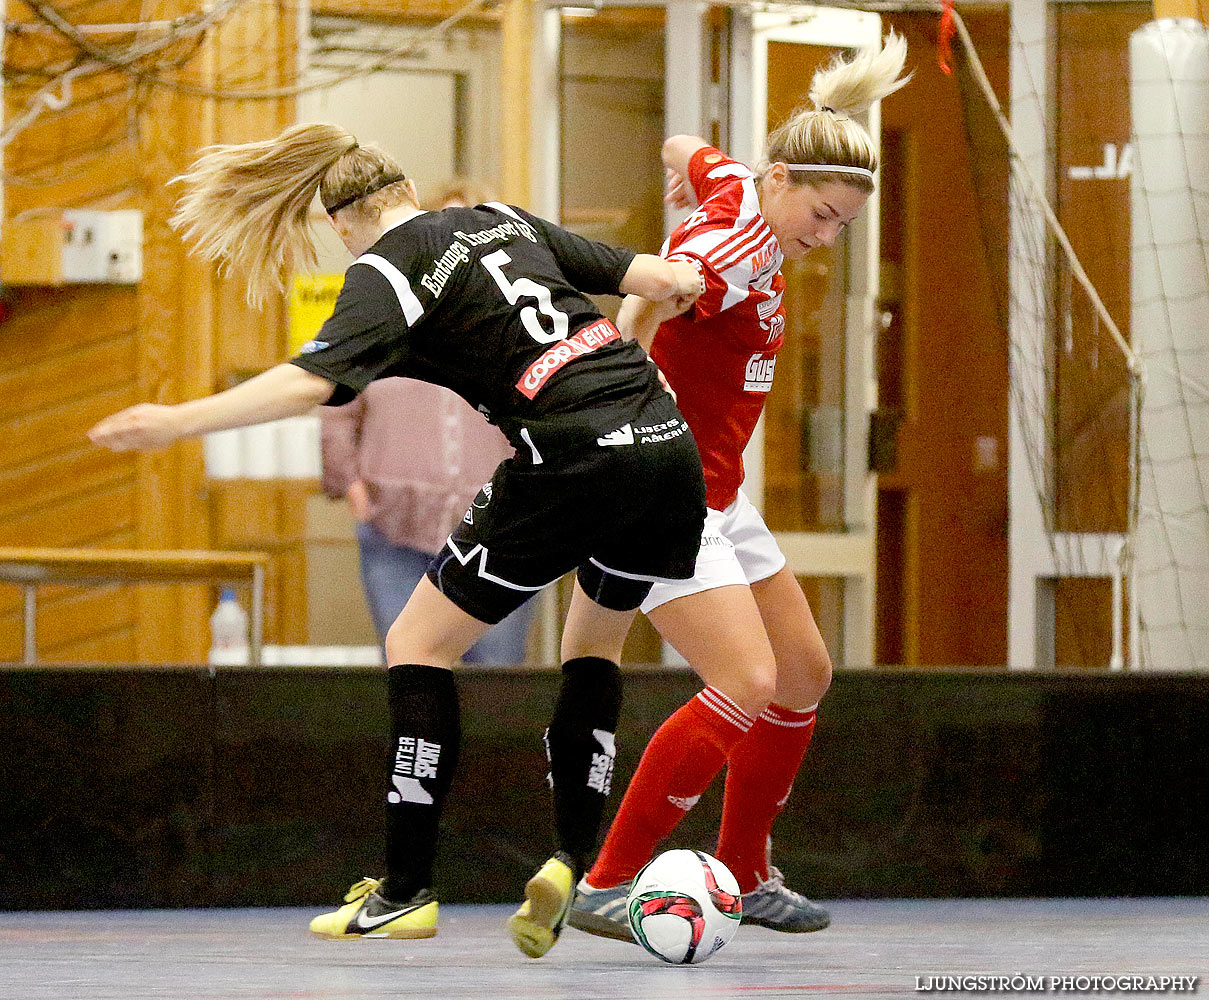 Futsal-DM Holmalunds IF-Falköpings KIK 2-2,dam,Åse-Vistehallen,Grästorp,Sverige,Futsal,,2015,127818